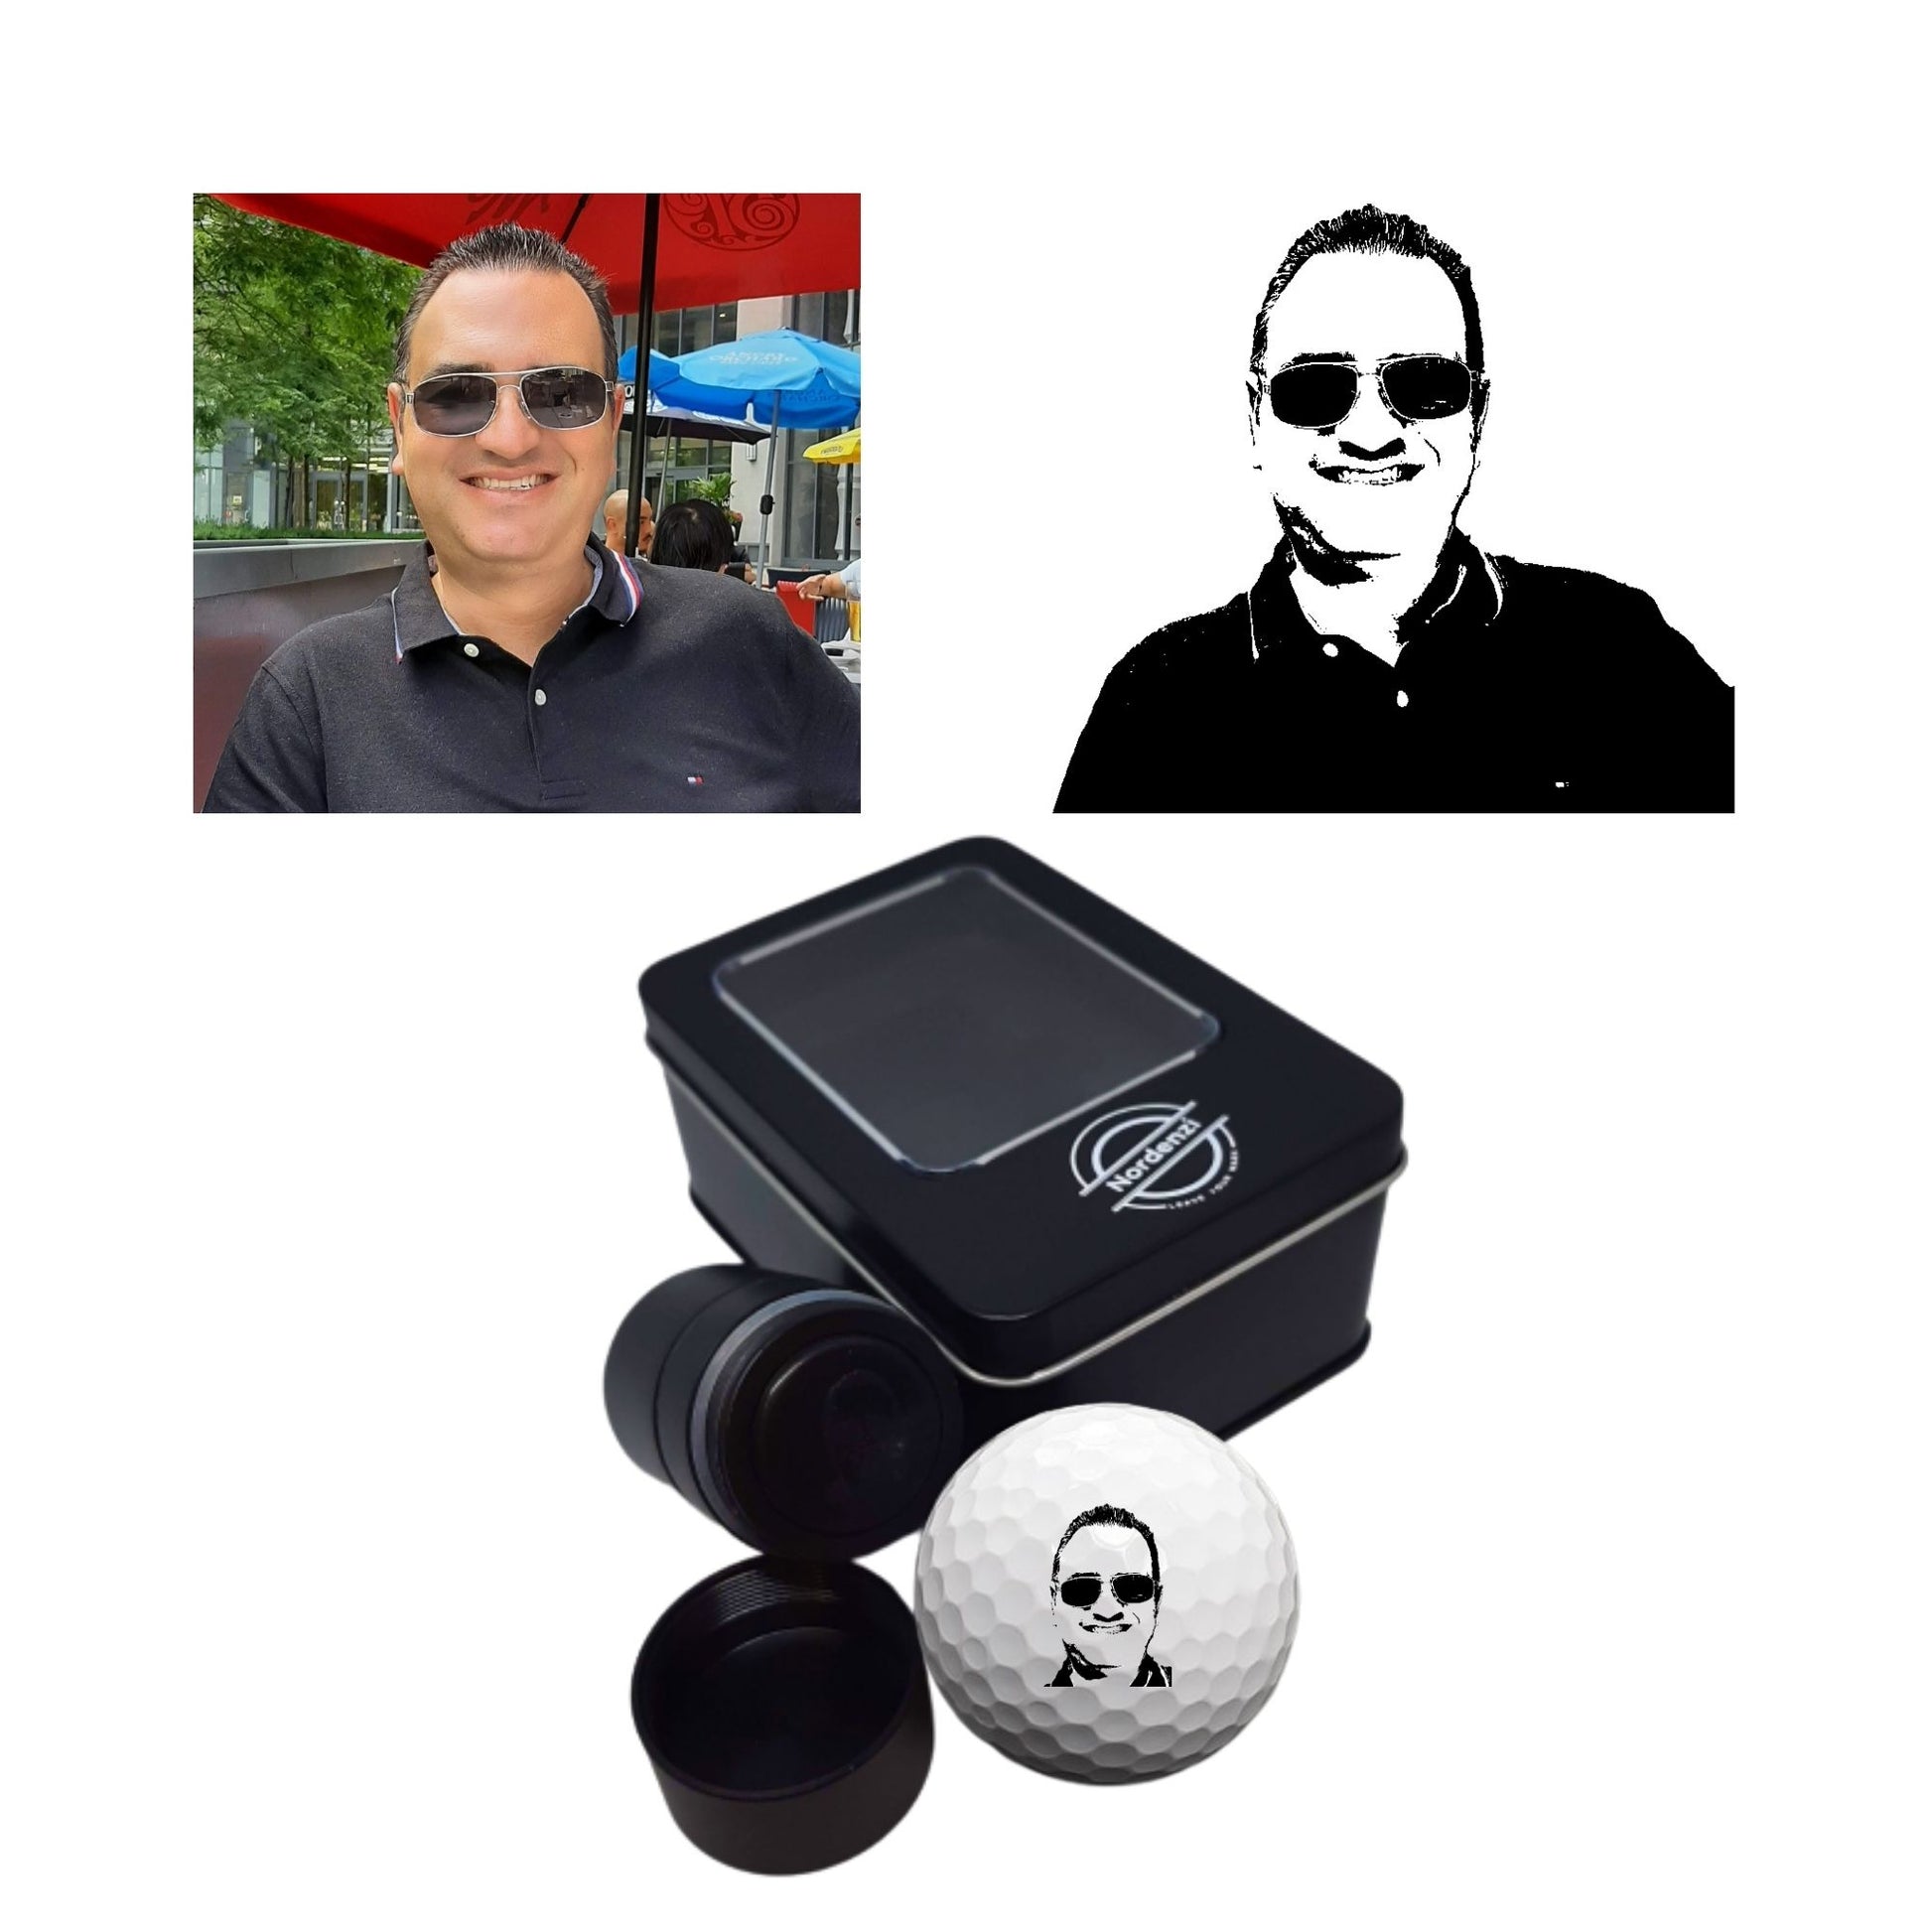 Personalized Golf Ball Stamp, Custom golf ball stamp, Nordenzi, Golf ball stamper, personalized golf balls